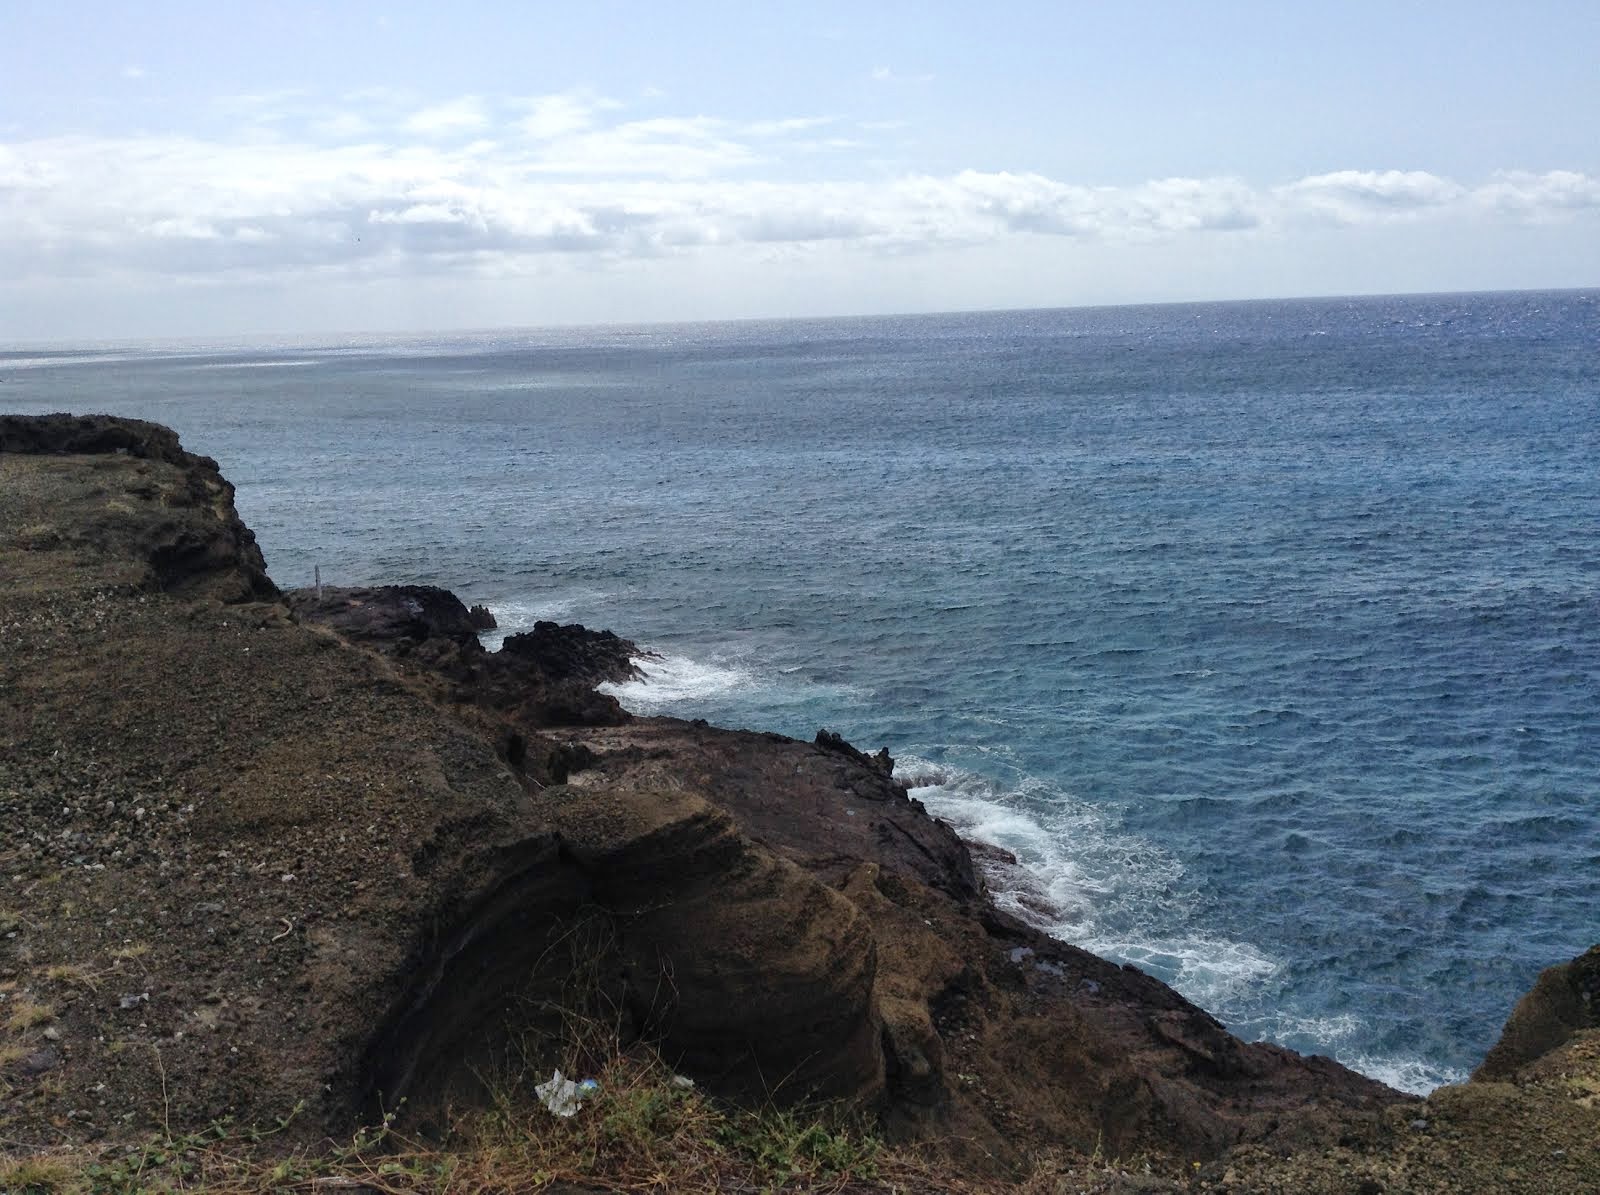 THE CLIFFS OF HAWAII 2014